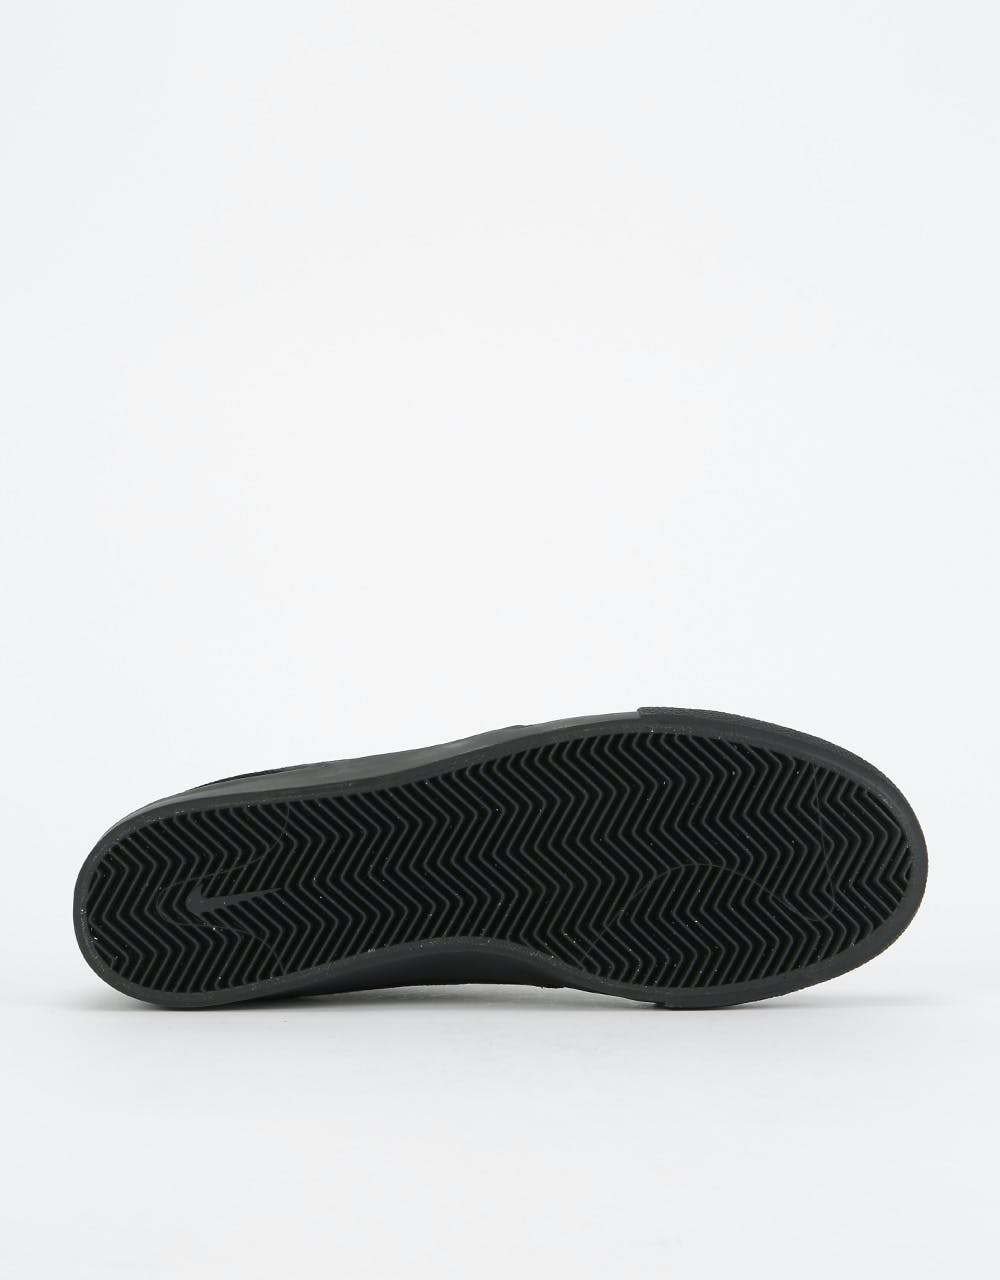 Nike SB Zoom Stefan Janoski Canvas RM Skate Shoes - Black/Black-Black-